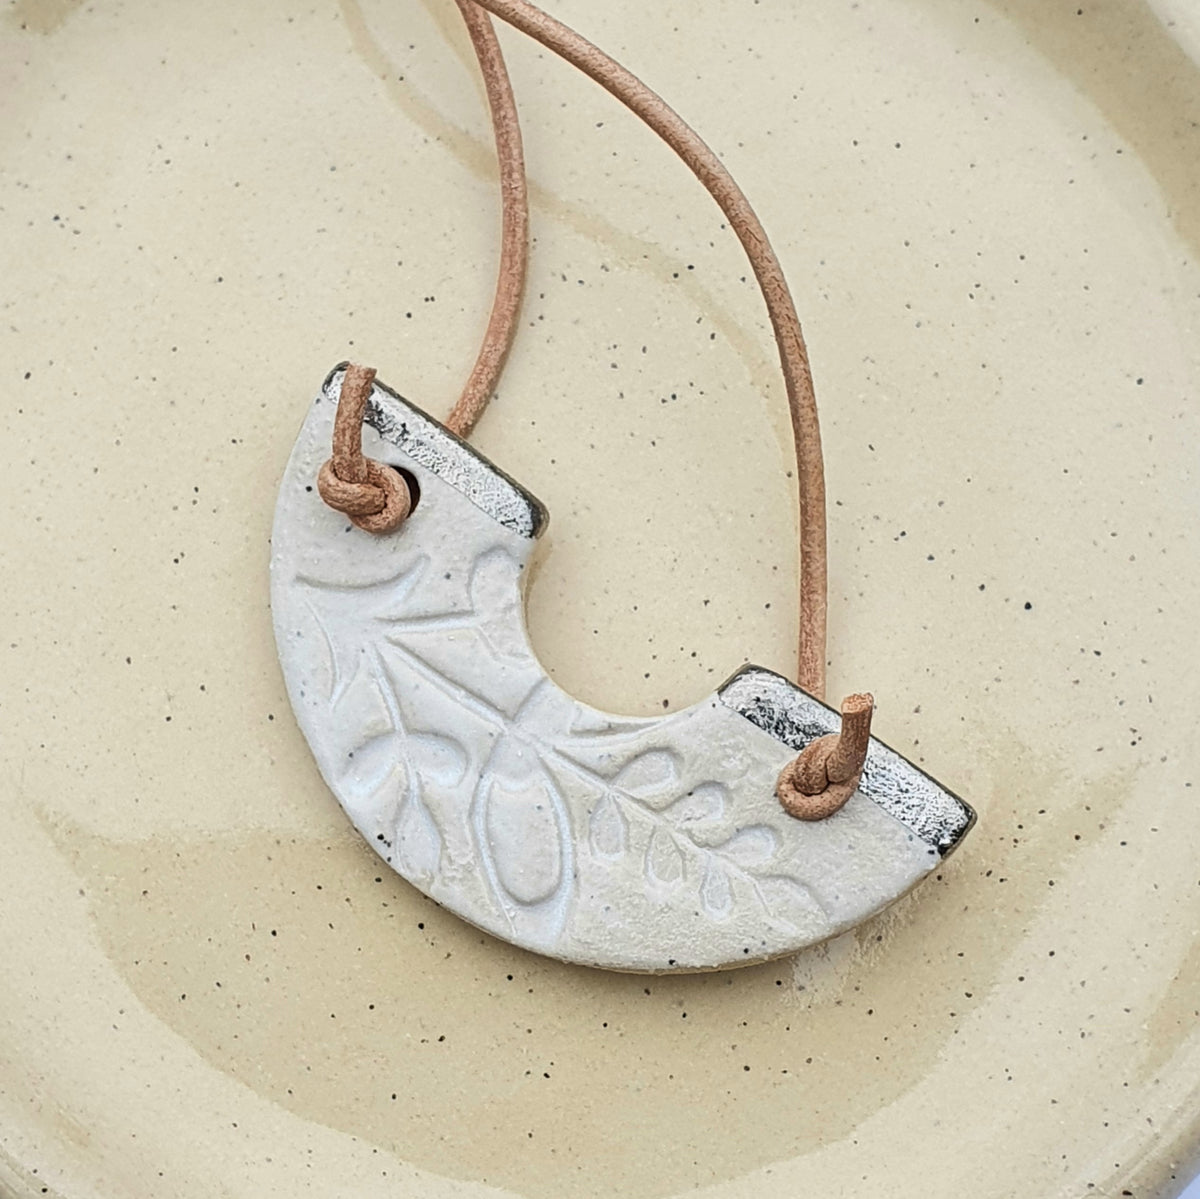 Speckled clay necklace - U shape, white glaze with platinum lustre detailing